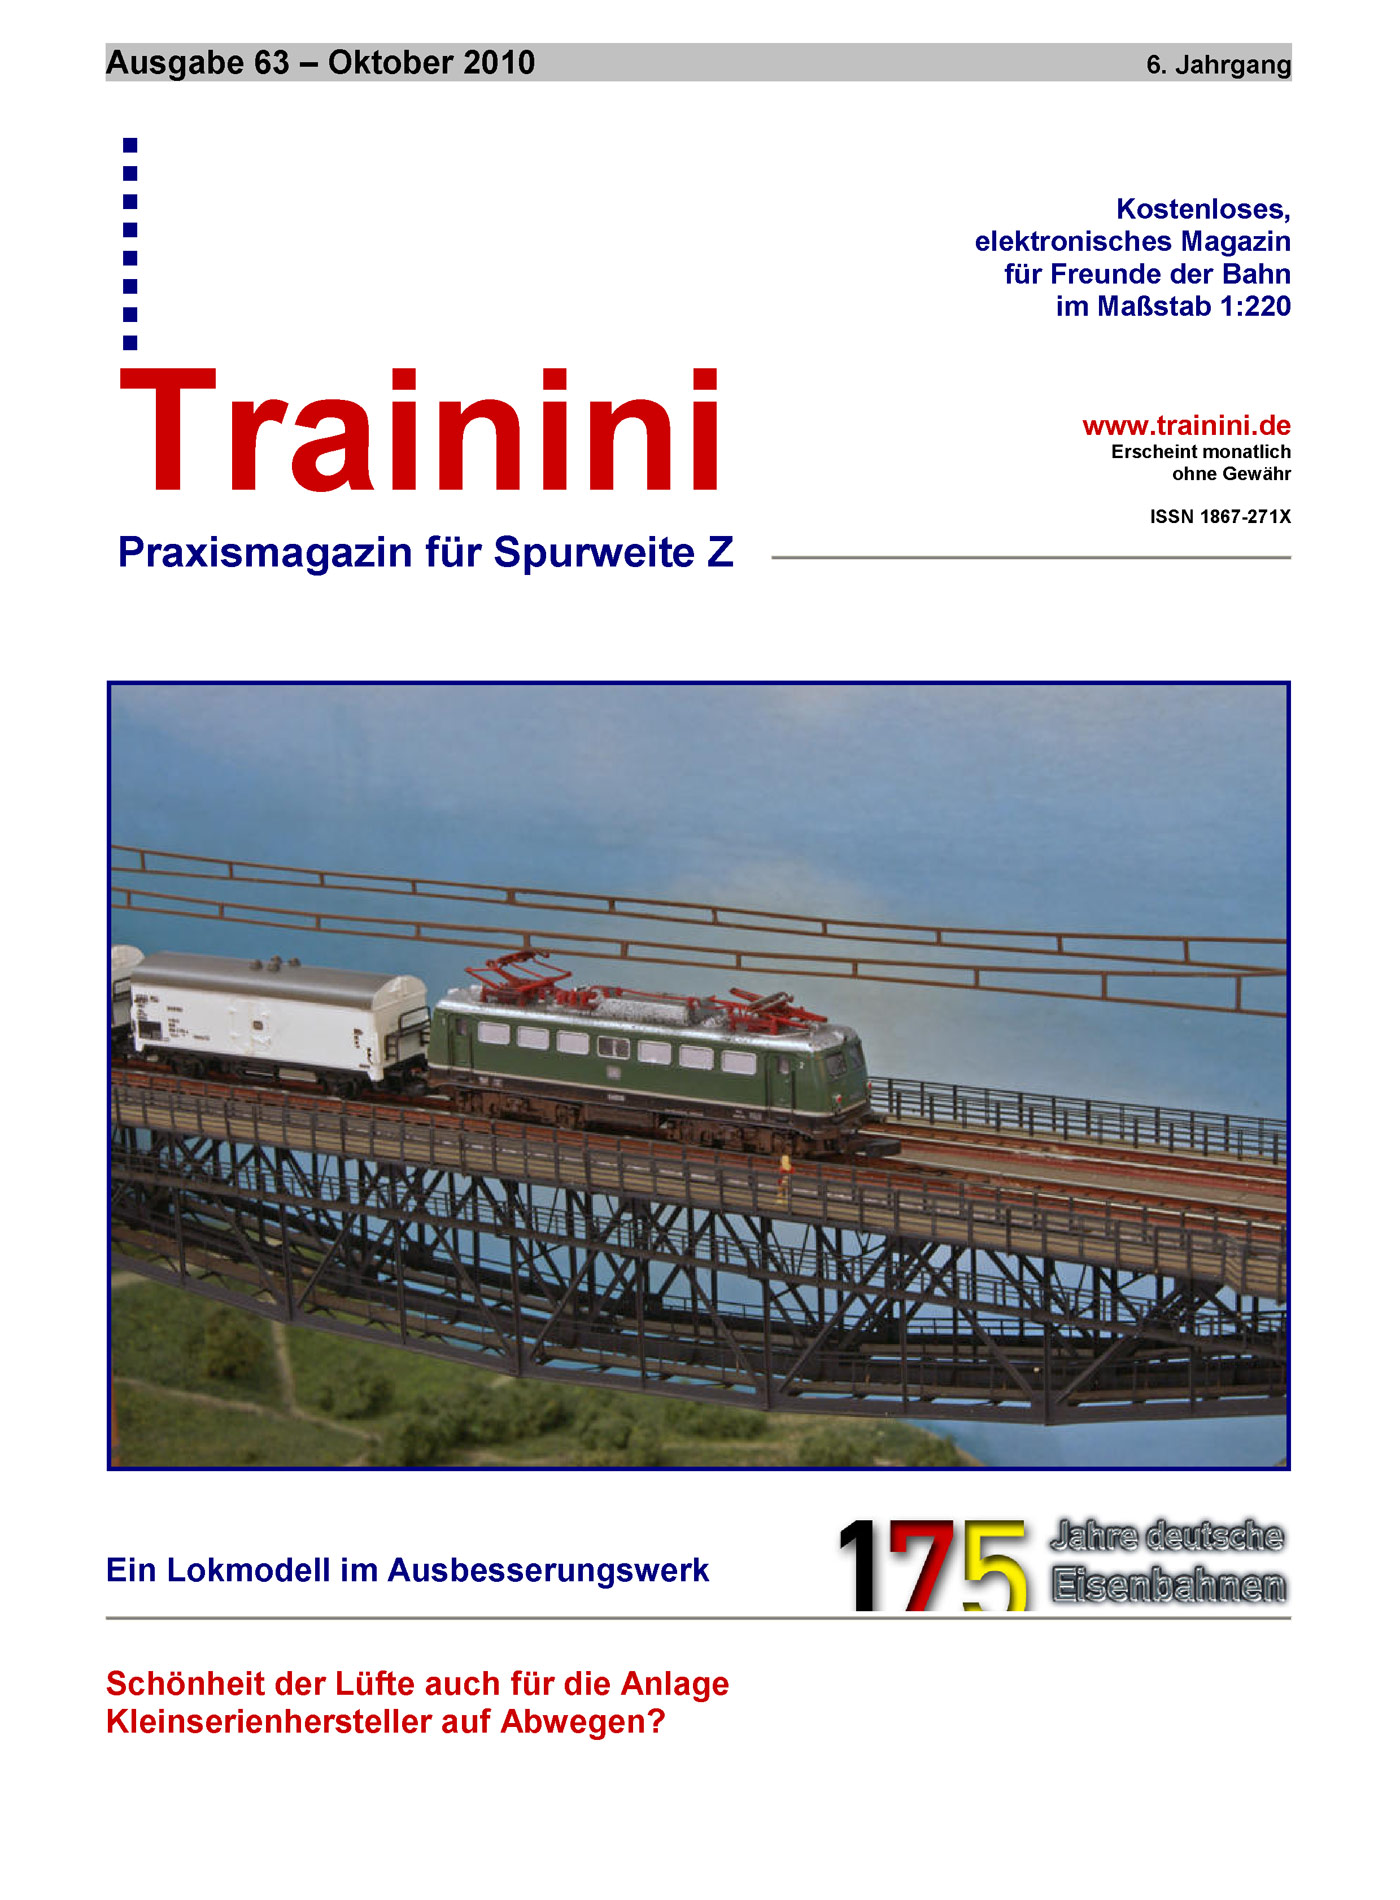 Trainini Ausgabe Oktober 2010